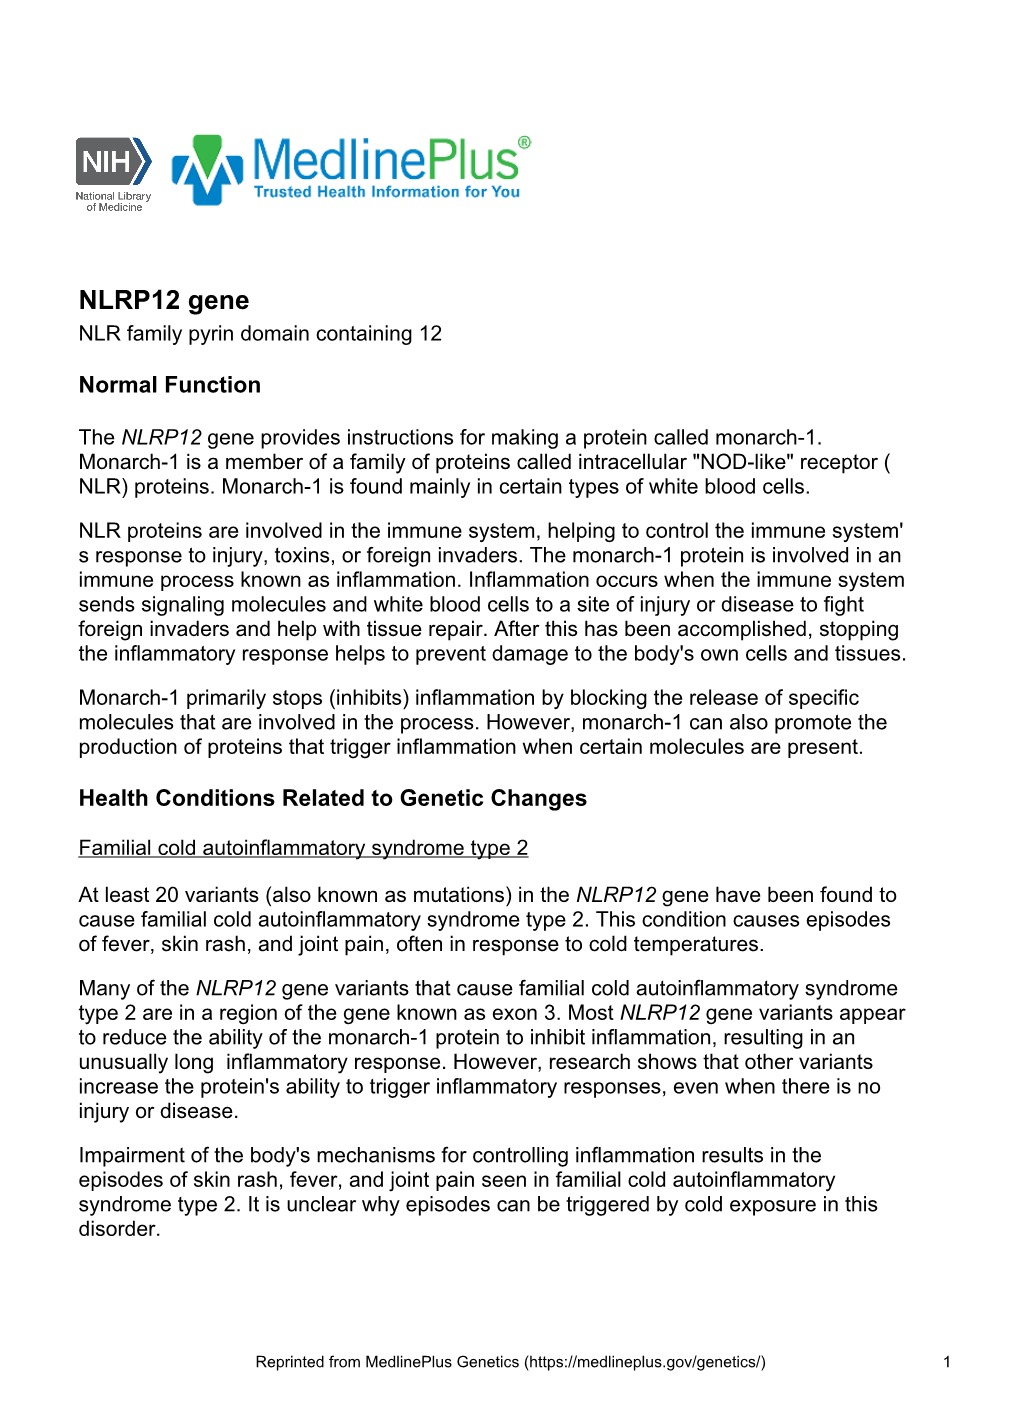 NLRP12 Gene NLR Family Pyrin Domain Containing 12